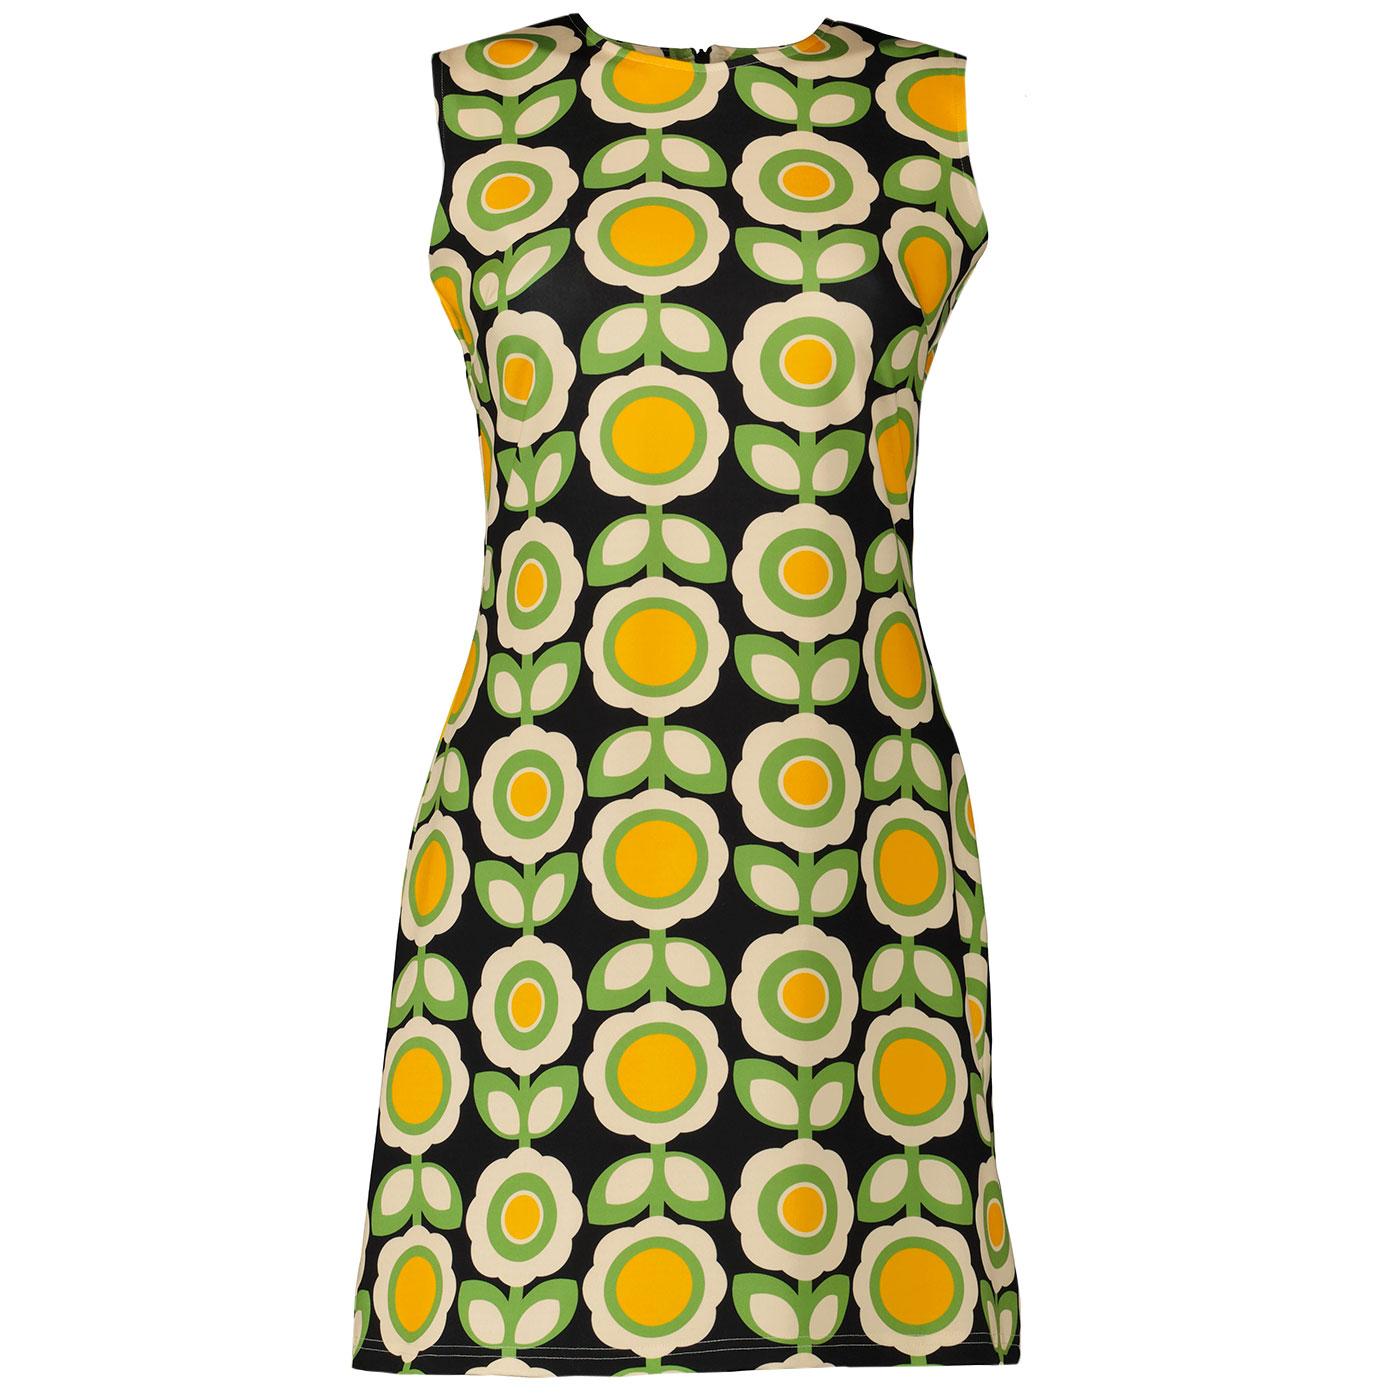 Madcap England Daytripper 1960s Mod Shift Dress in Daydream Flower print